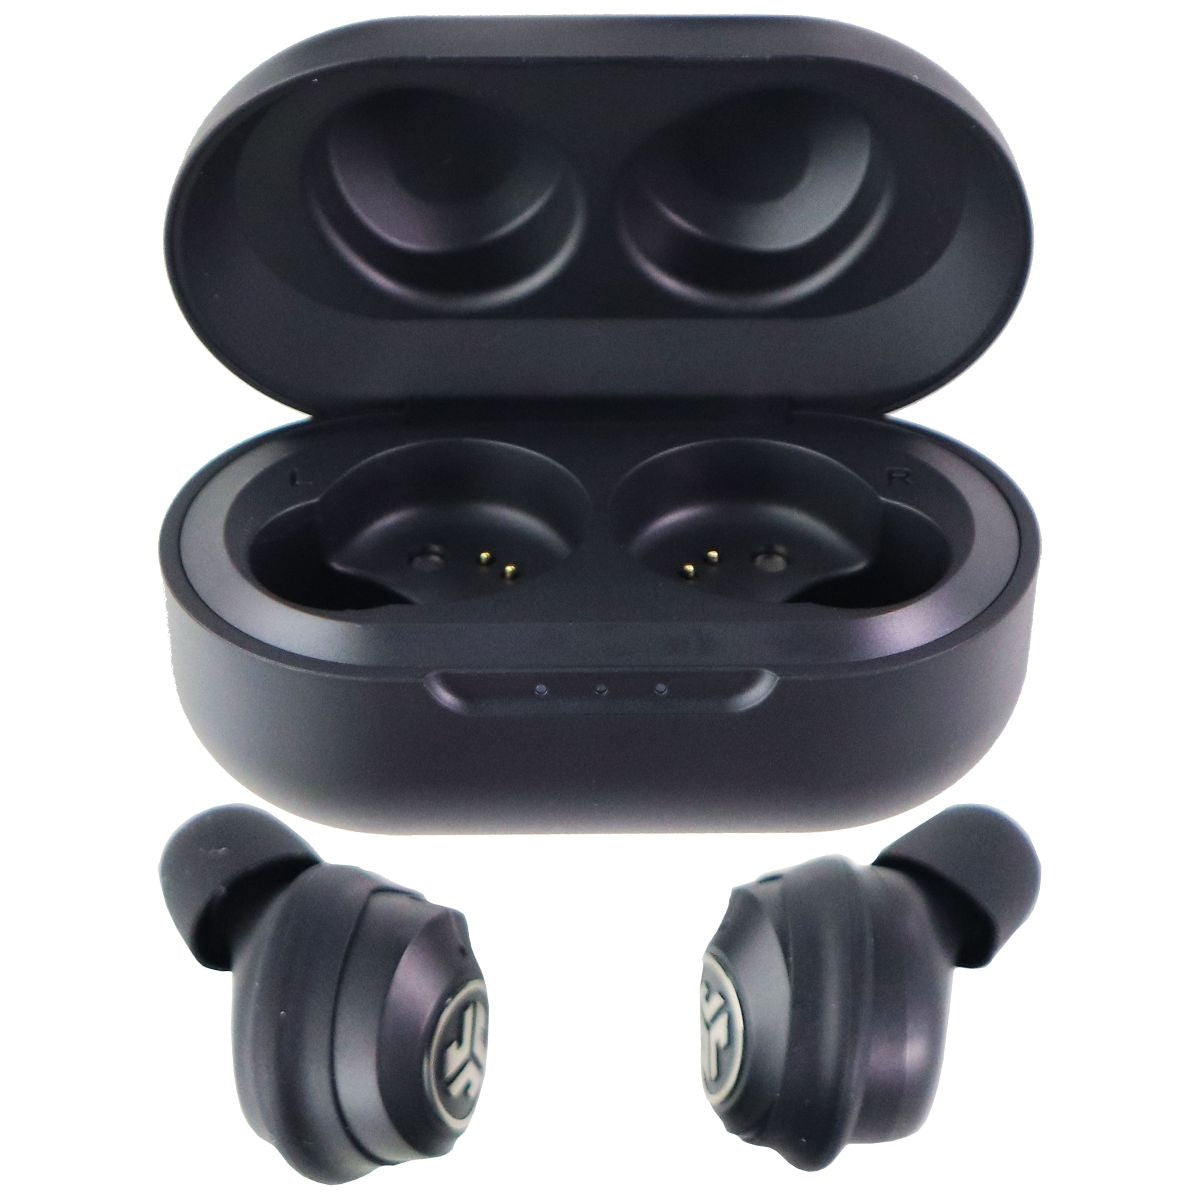 JLab JBuds Air ANC True Wireless Bluetooth Earbuds & Charge Case - Black